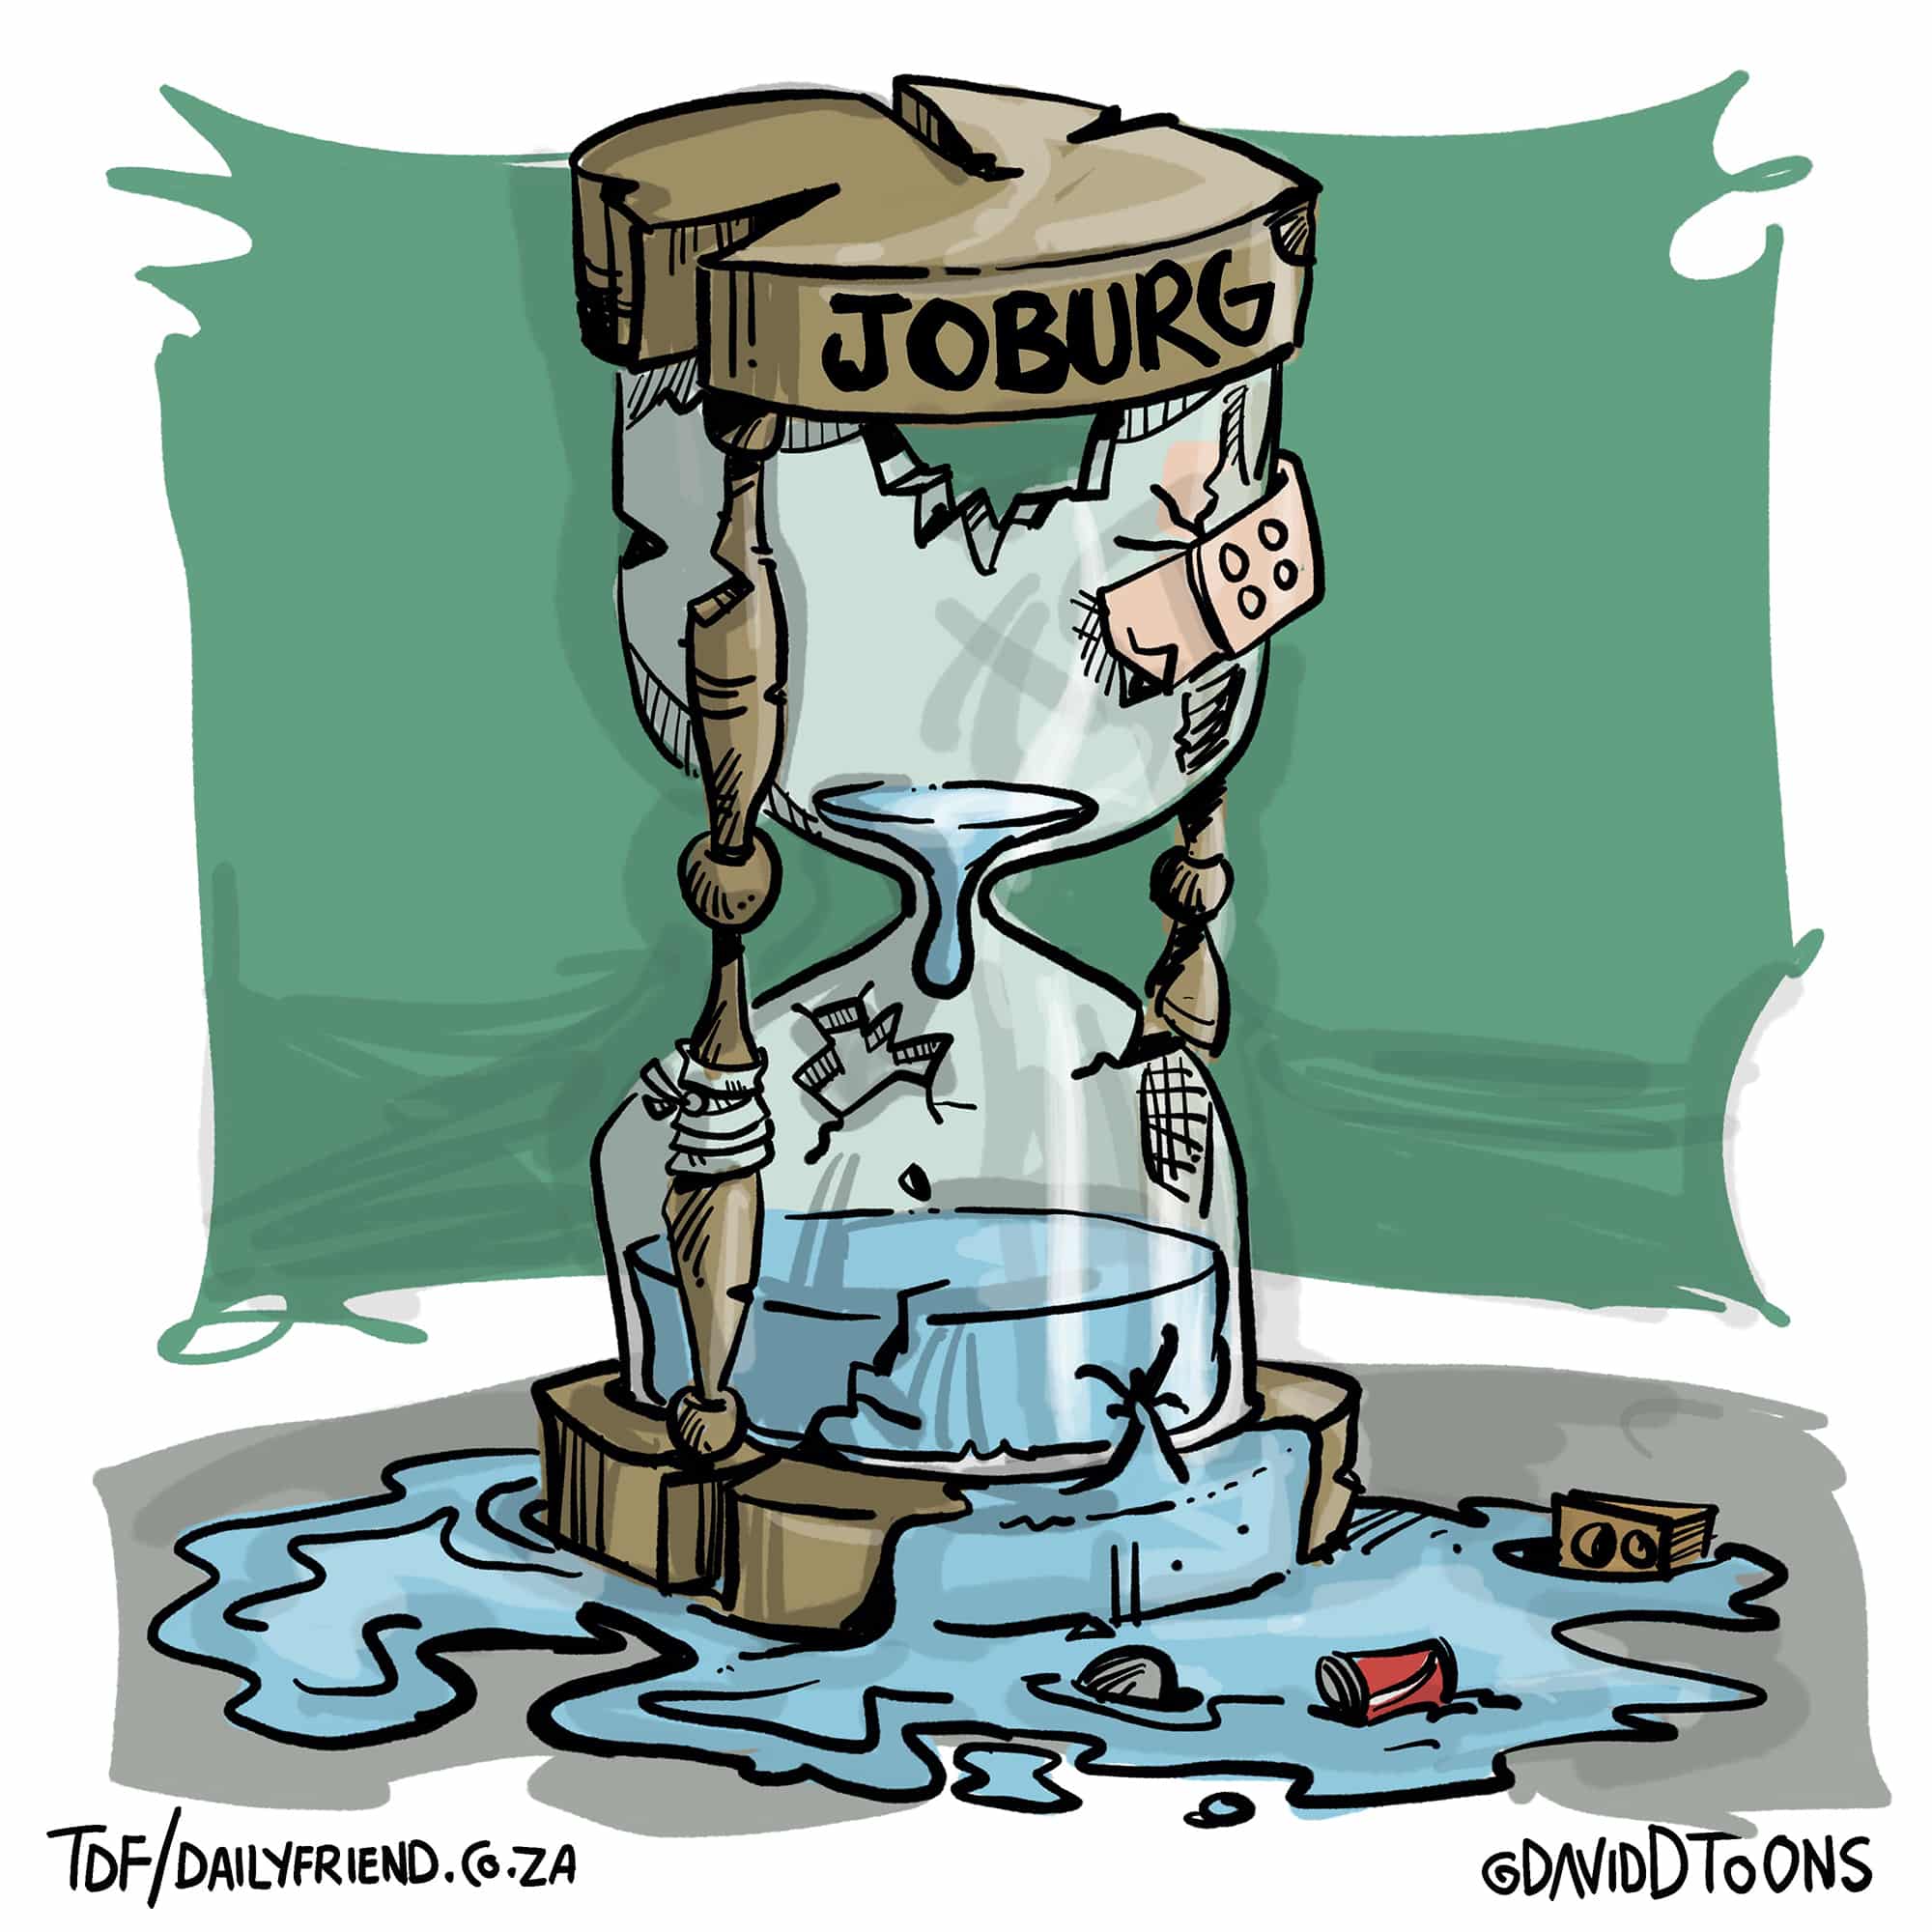 Jo’burg water crisis